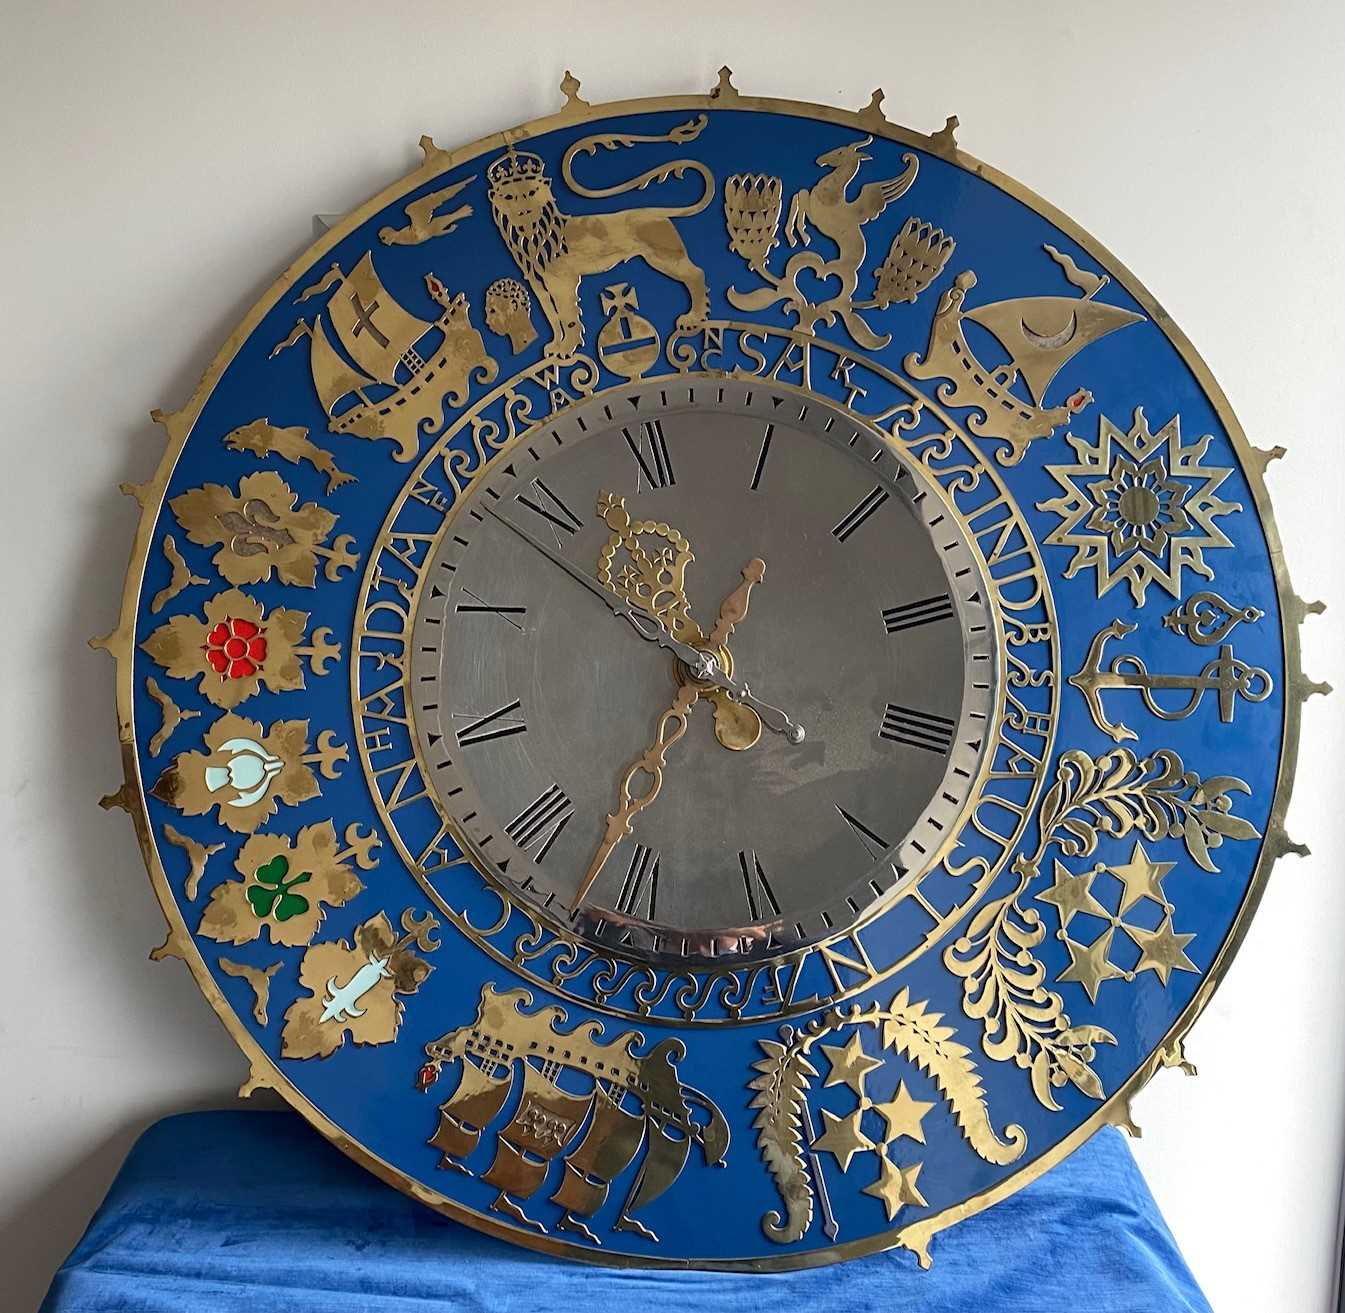 The Royal Commonwealth Society's wall clock,